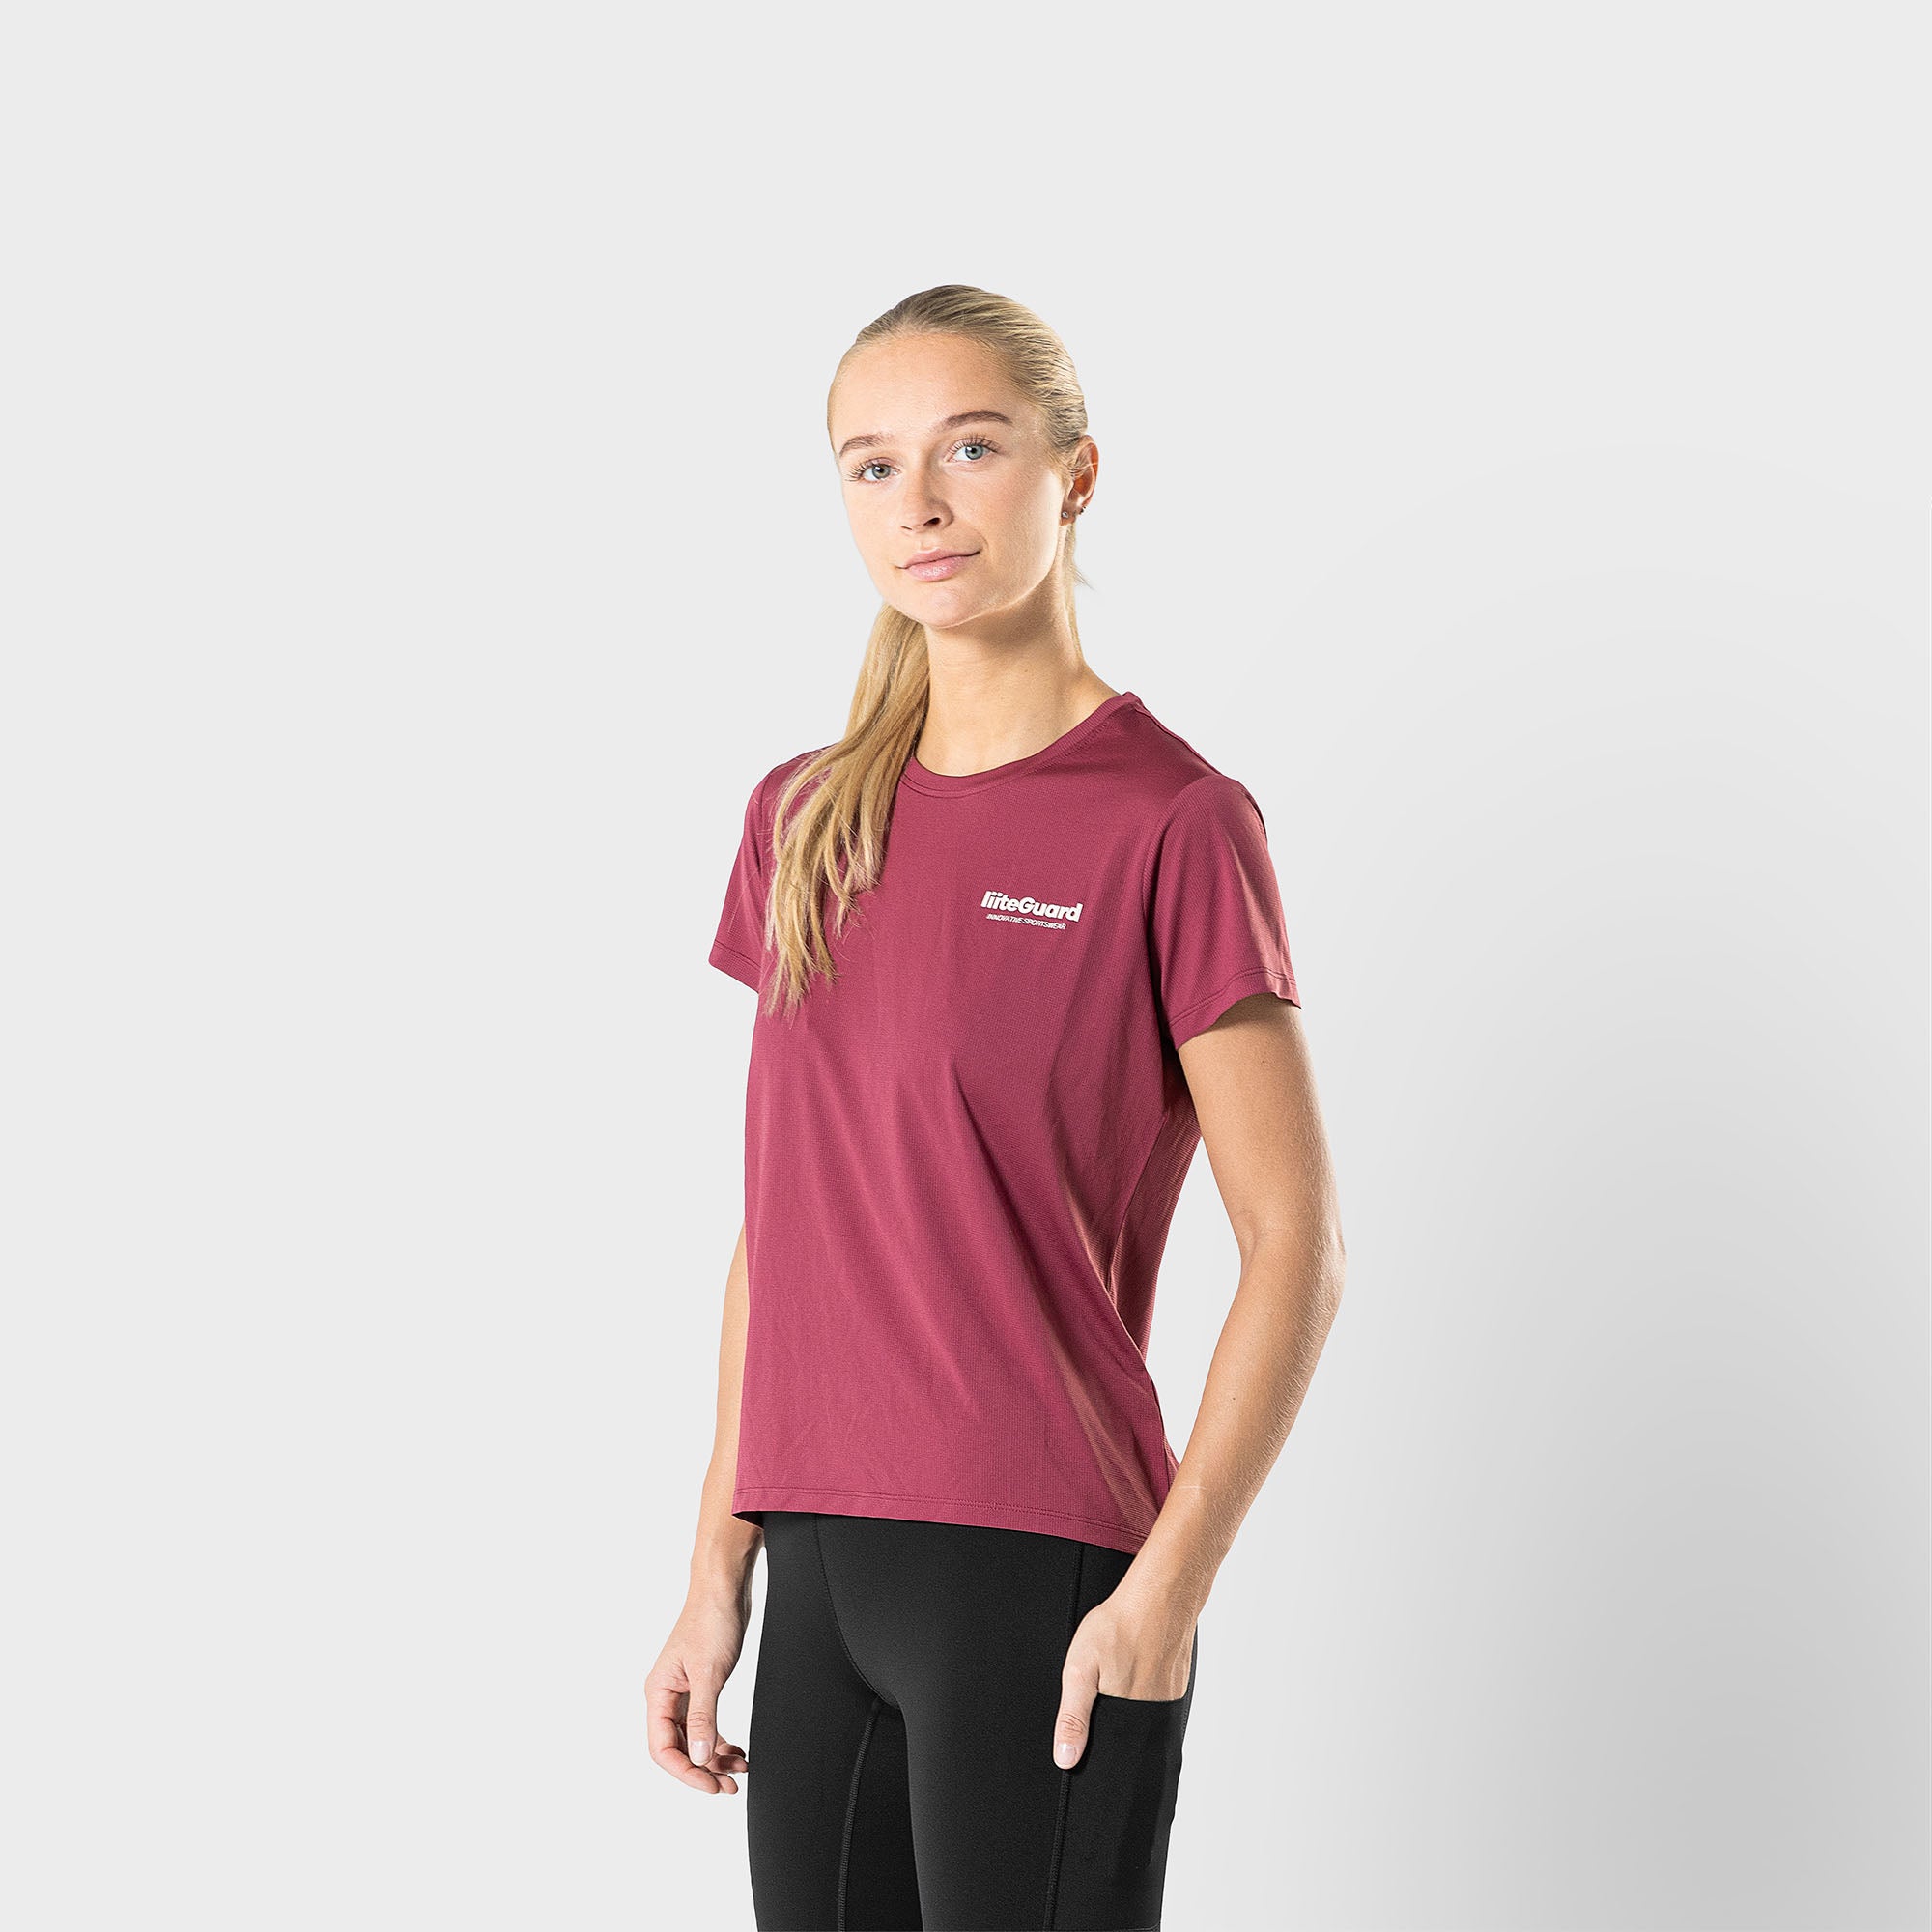 Liiteguard GROUND-TECH T-SHIRT (WOMEN) T-shirts Bordeaux